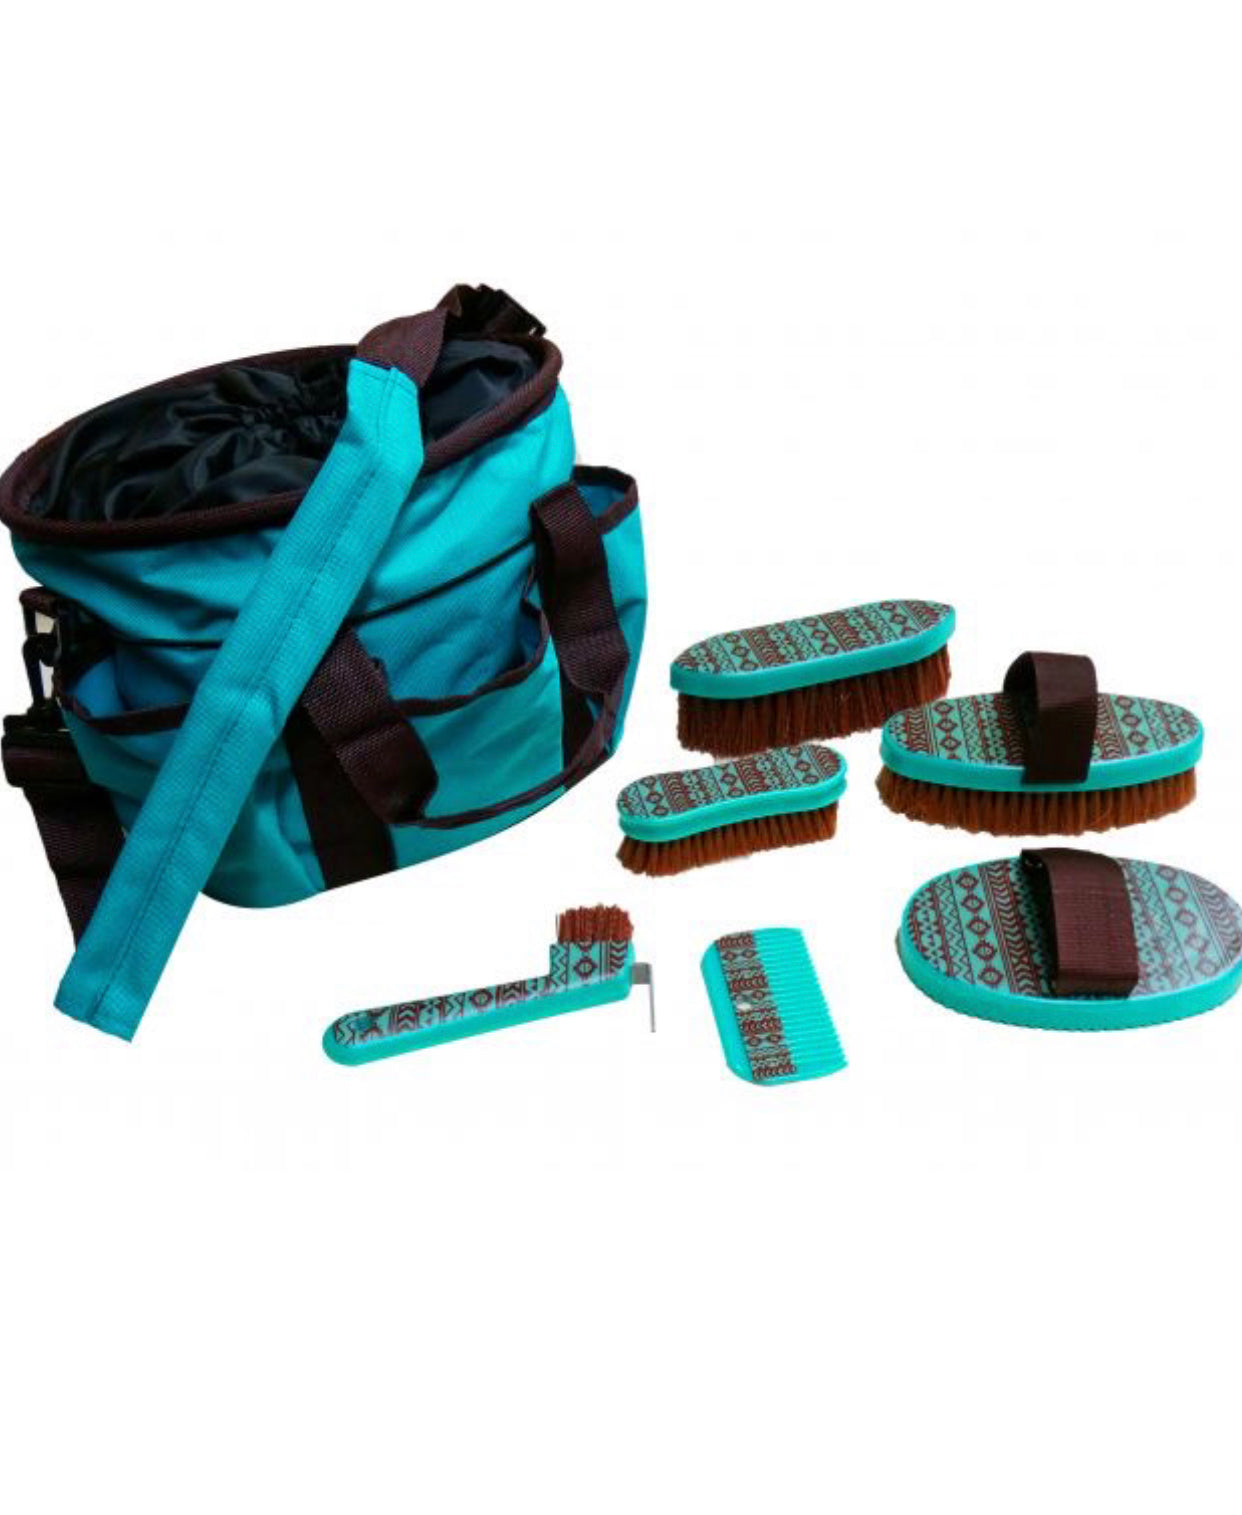 72BT001 - Aztec Print 6 piece grooming kit with nylon cordura carrying bag